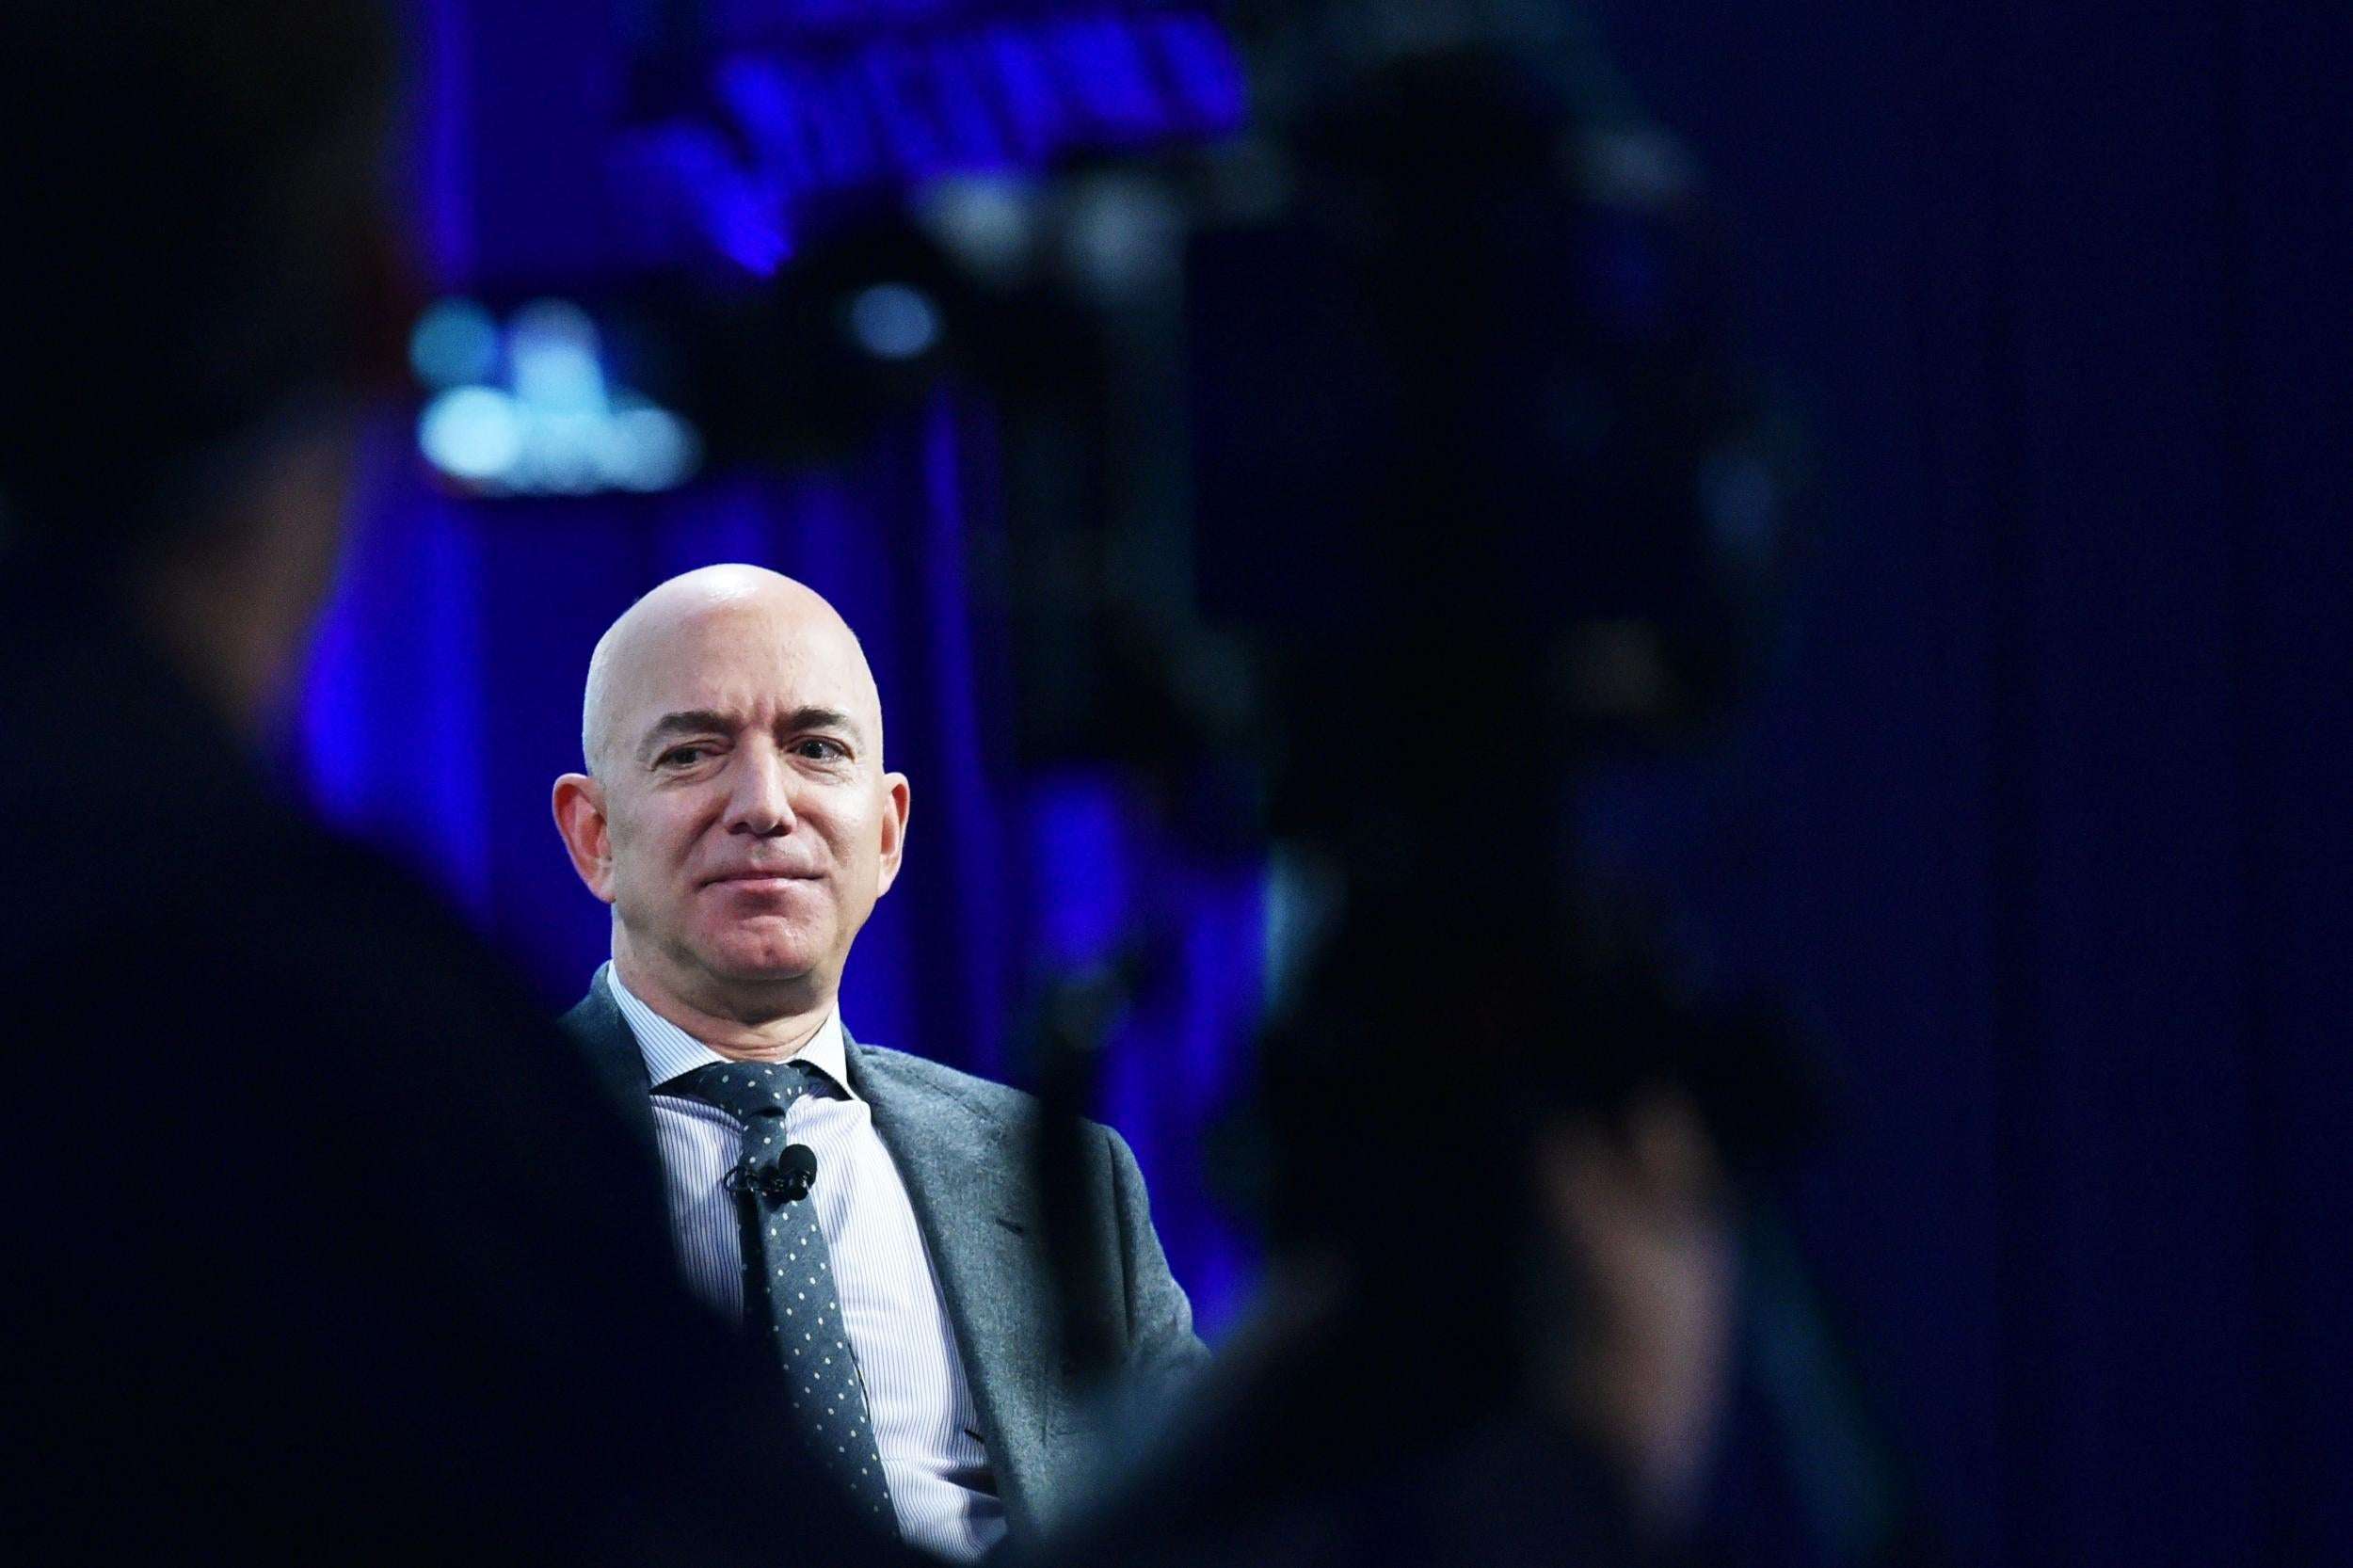 image for Coronavirus: Jeff Bezos, world’s richest man, asks public to donate to Amazon relief fund